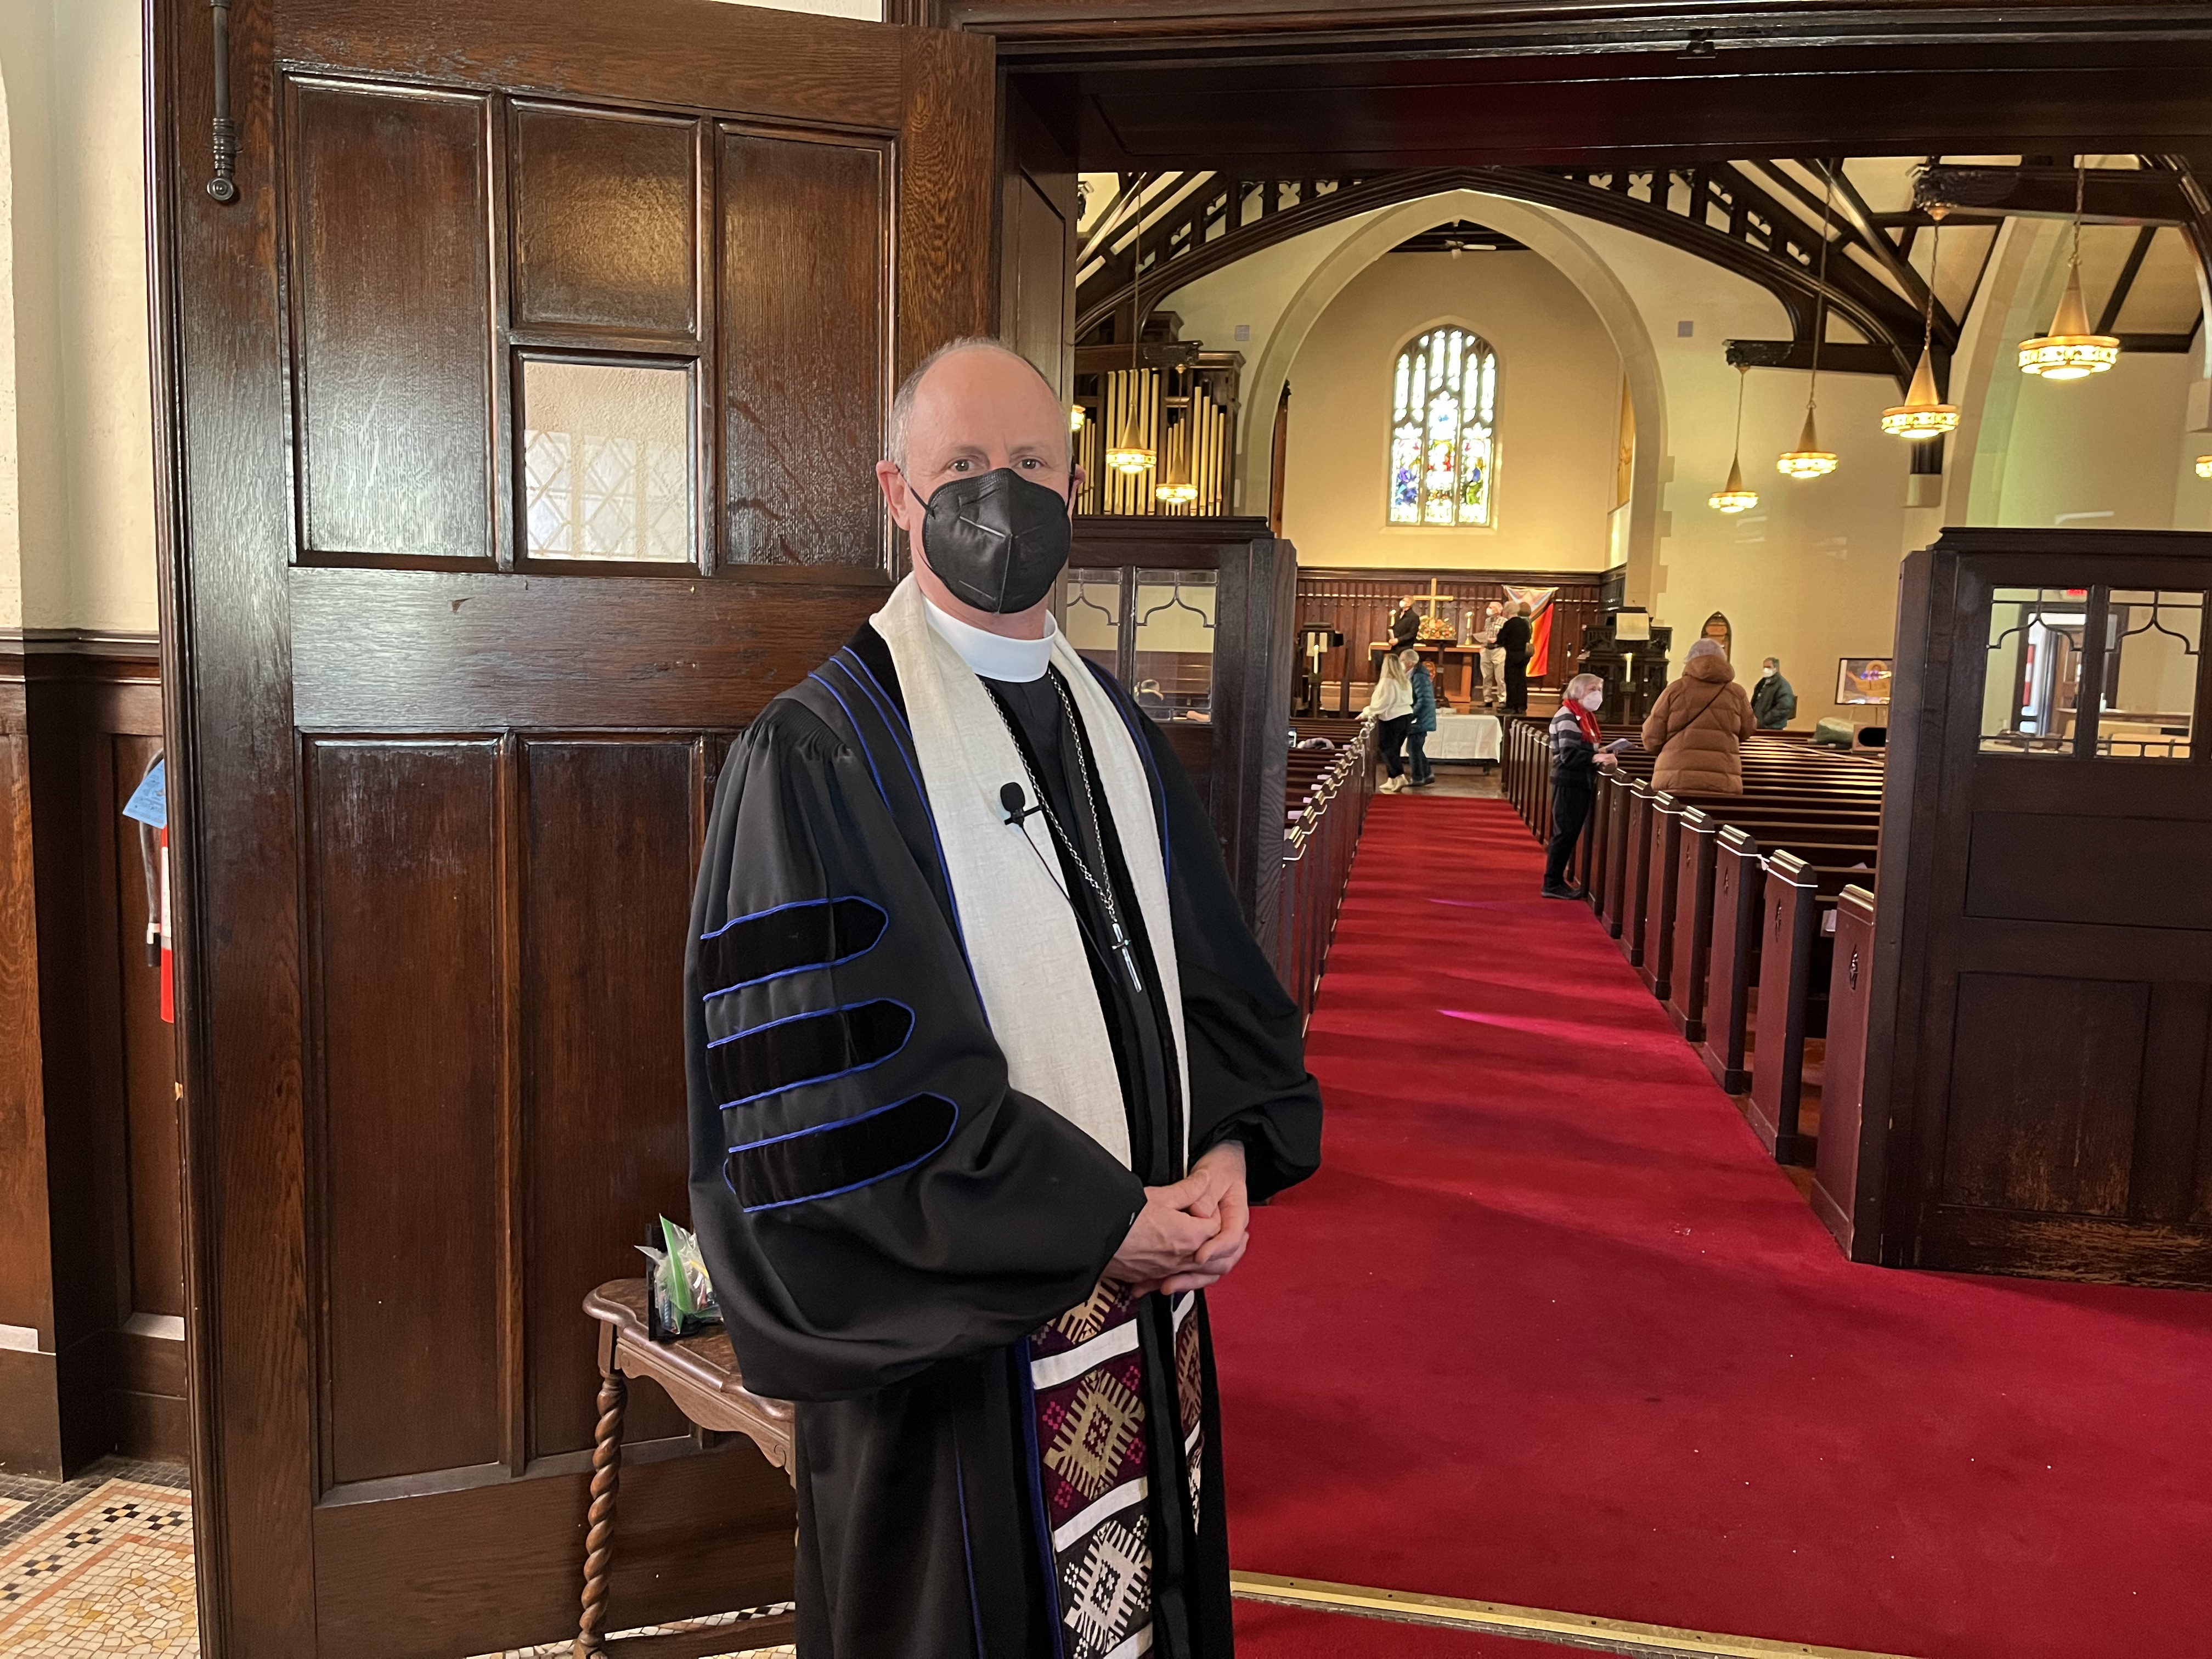 The Reverend Ken Baily standing before an open door to the sanctuary